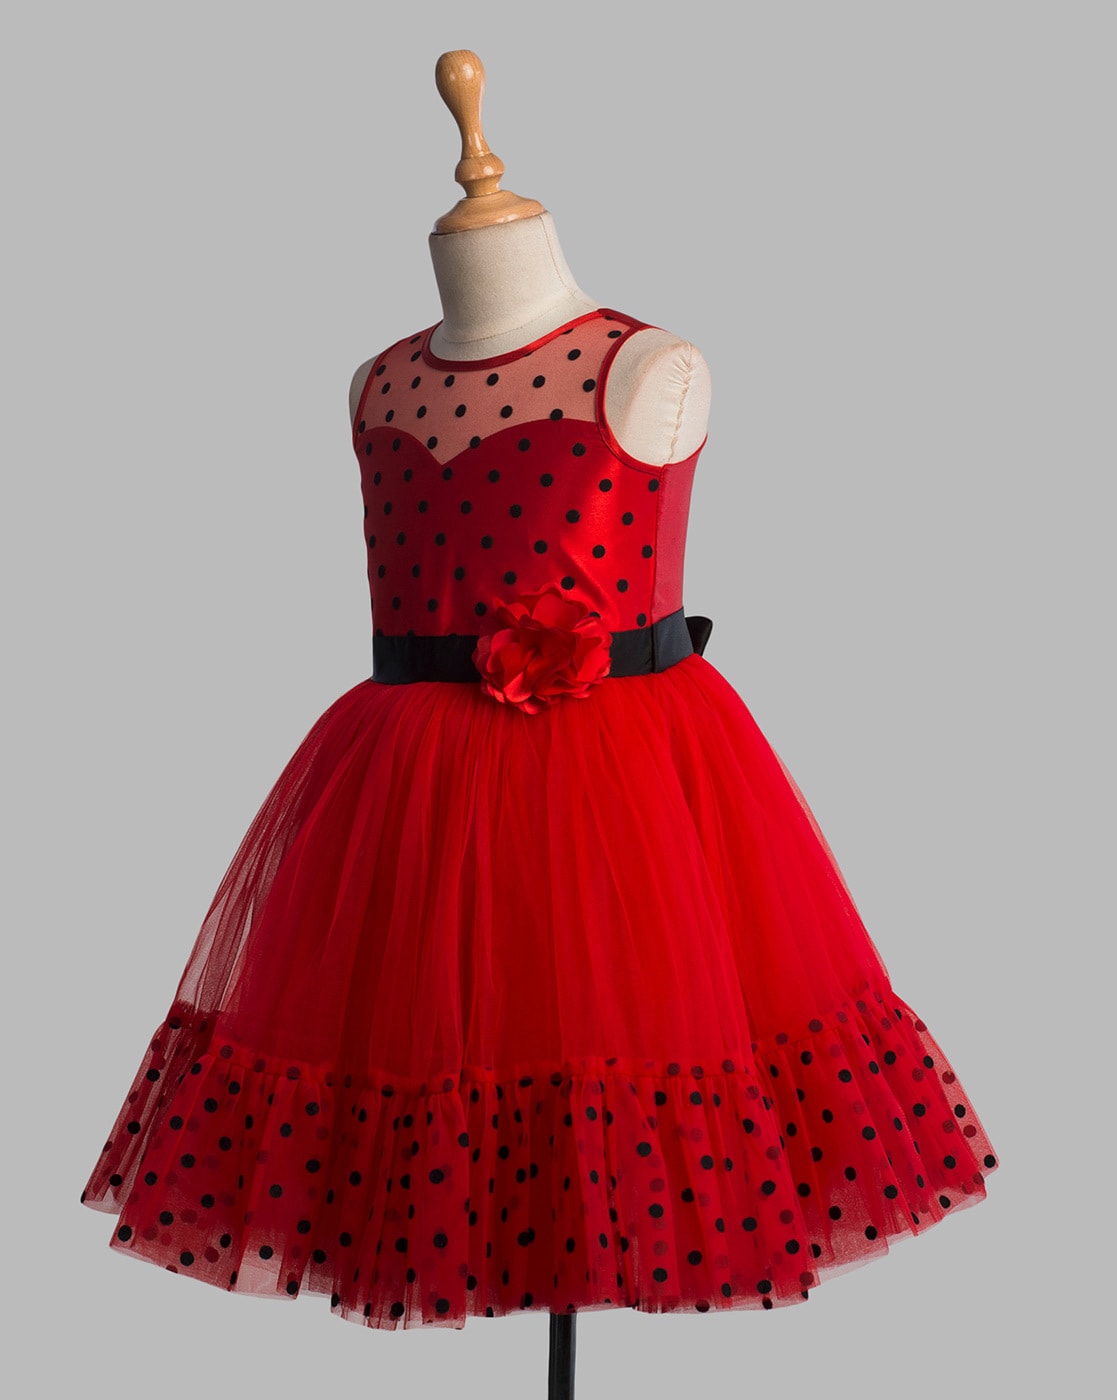 Details more than 99 ajio dresses for girls super hot